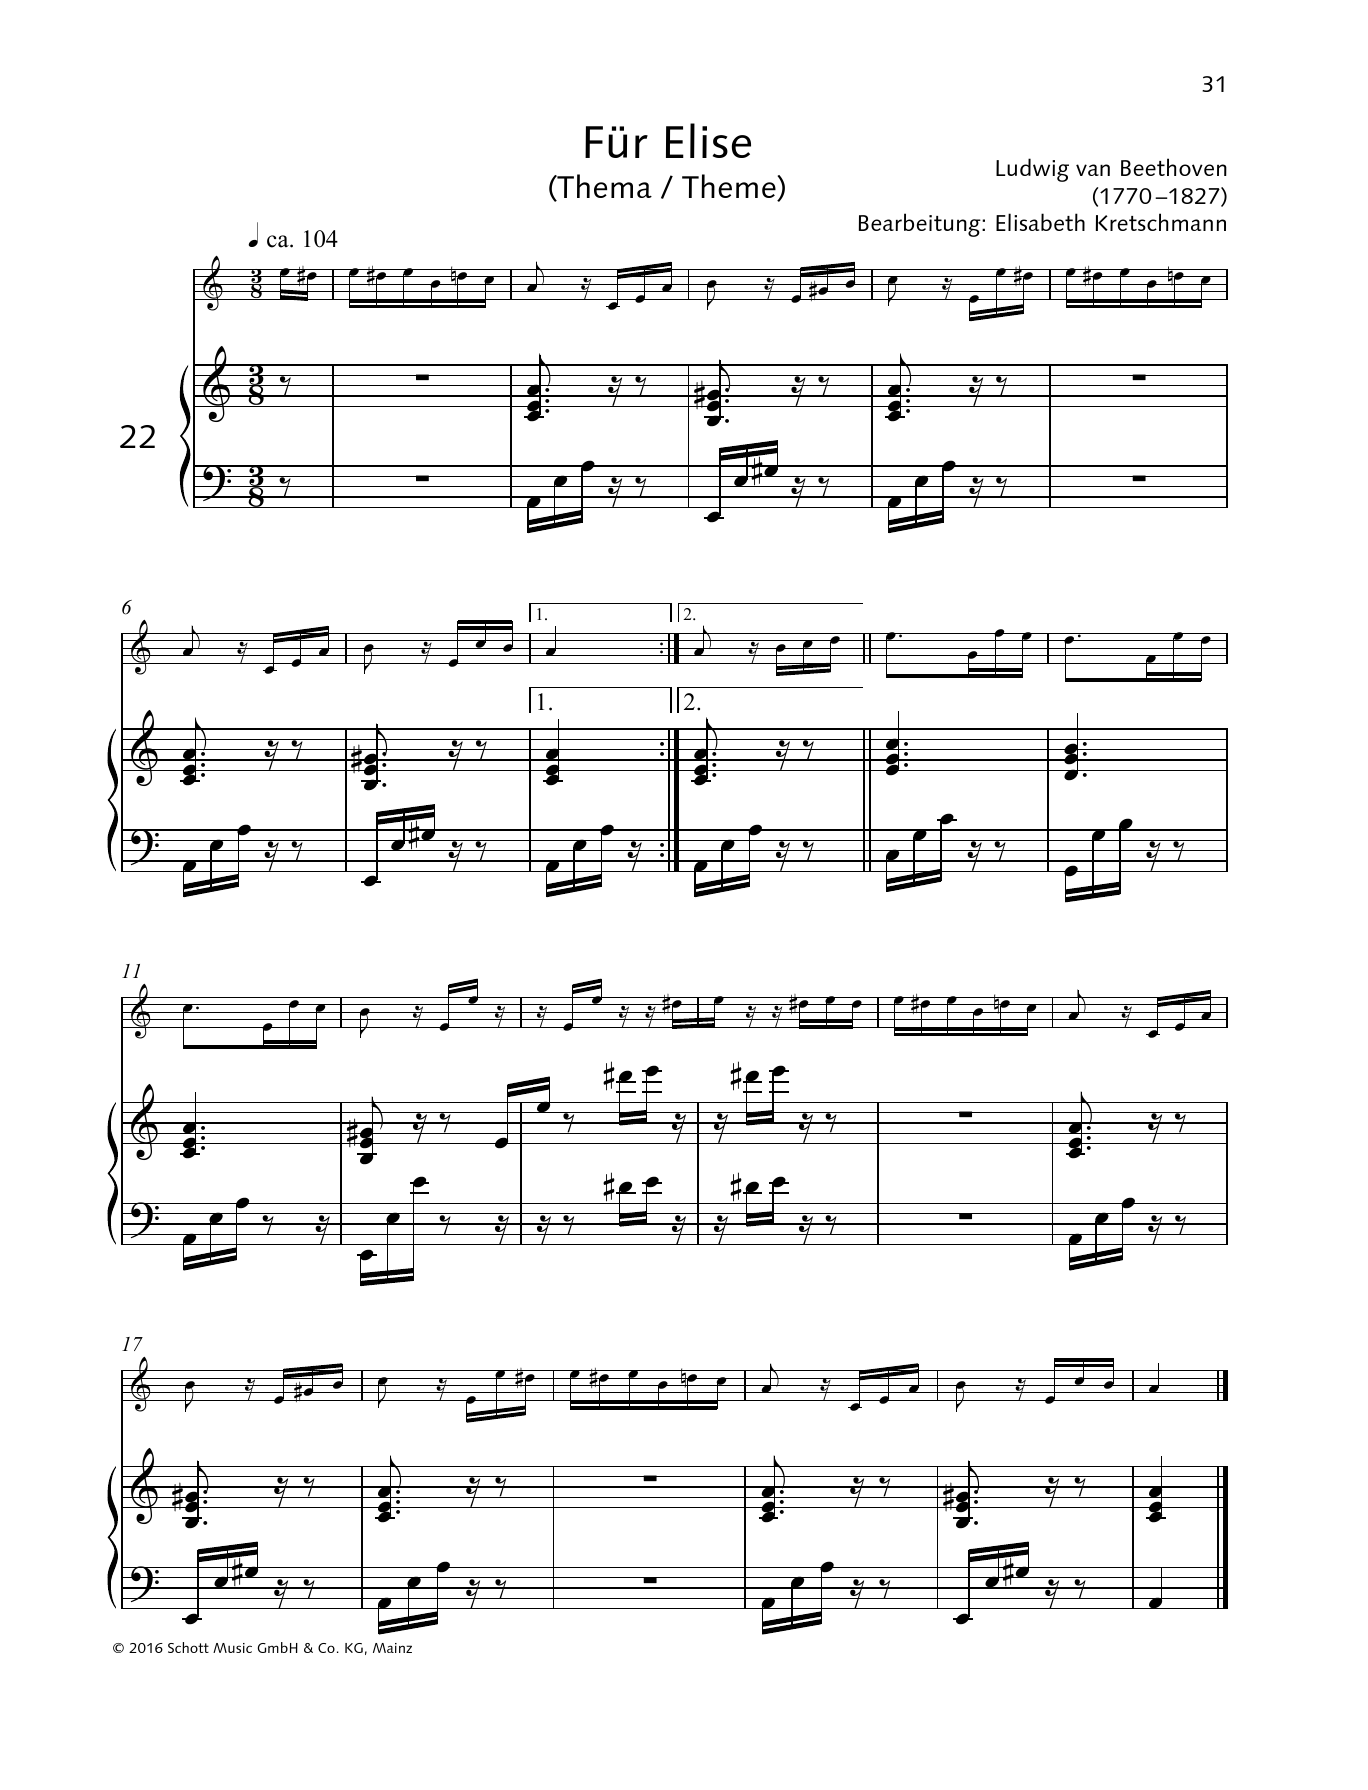 Download Elisabeth Kretschmann Fur Elise Sheet Music and learn how to play Woodwind Solo PDF digital score in minutes